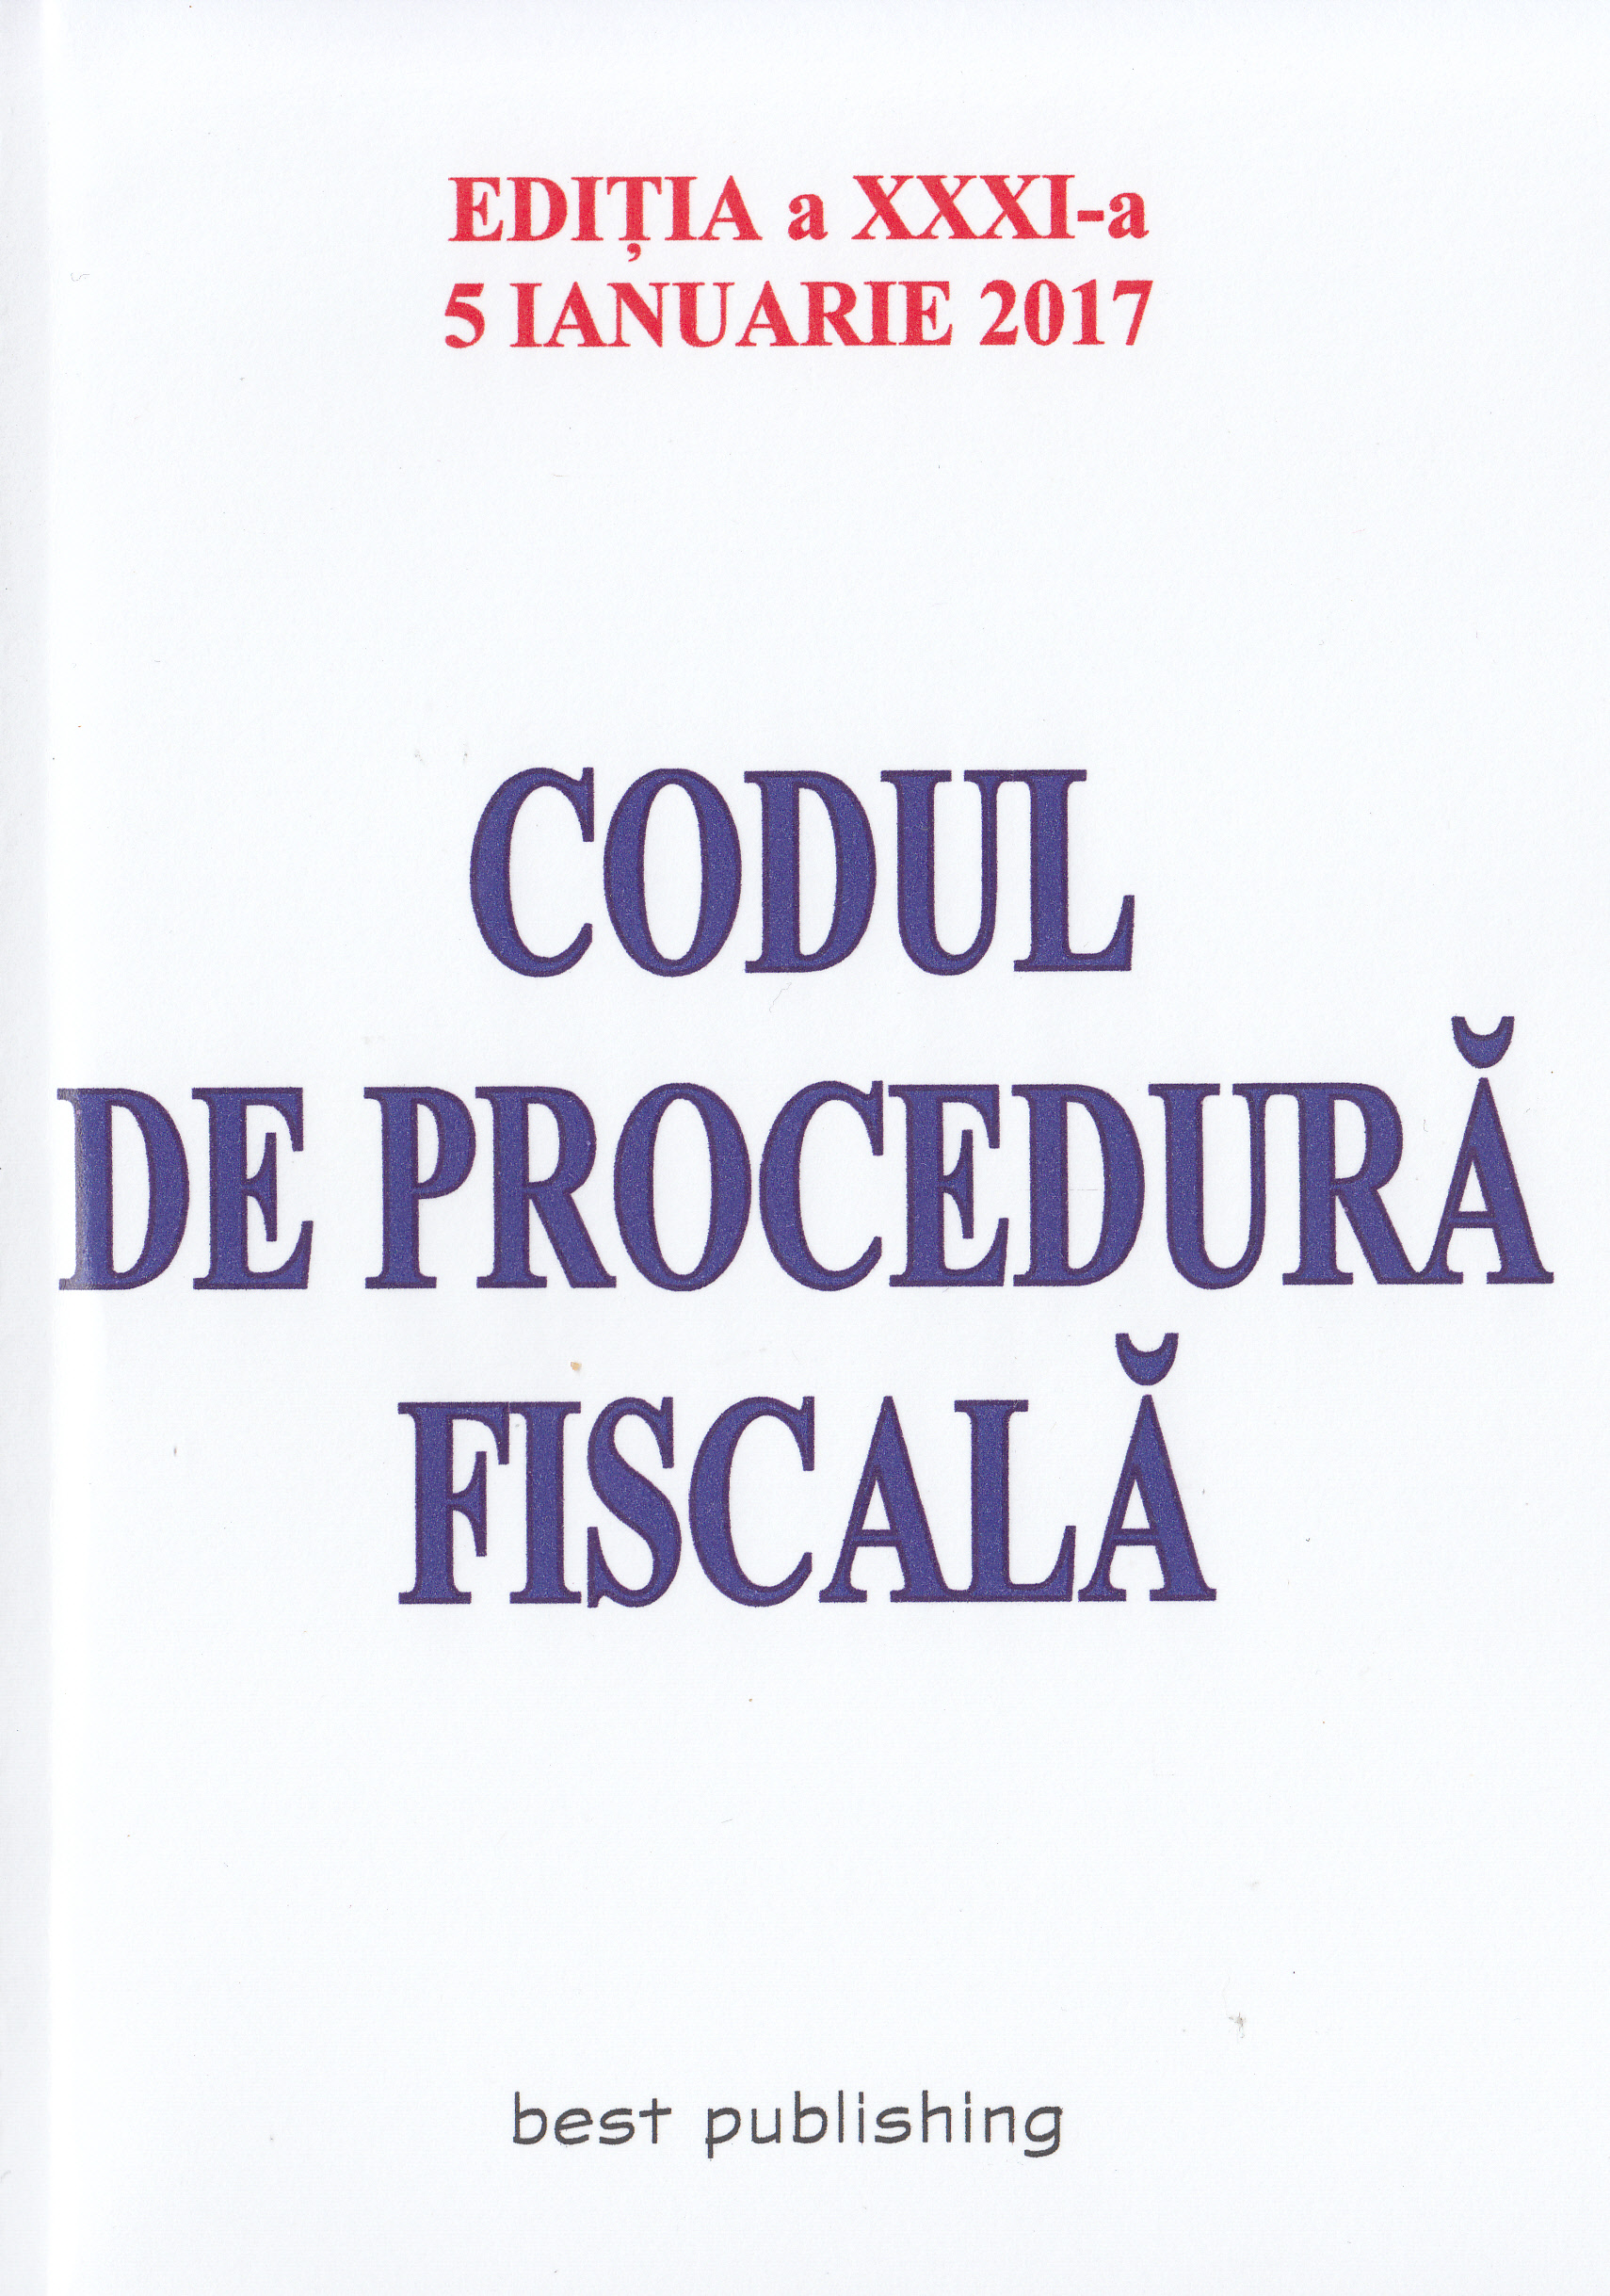 Codul de procedura fiscala Act. 5 Ianuarie 2017